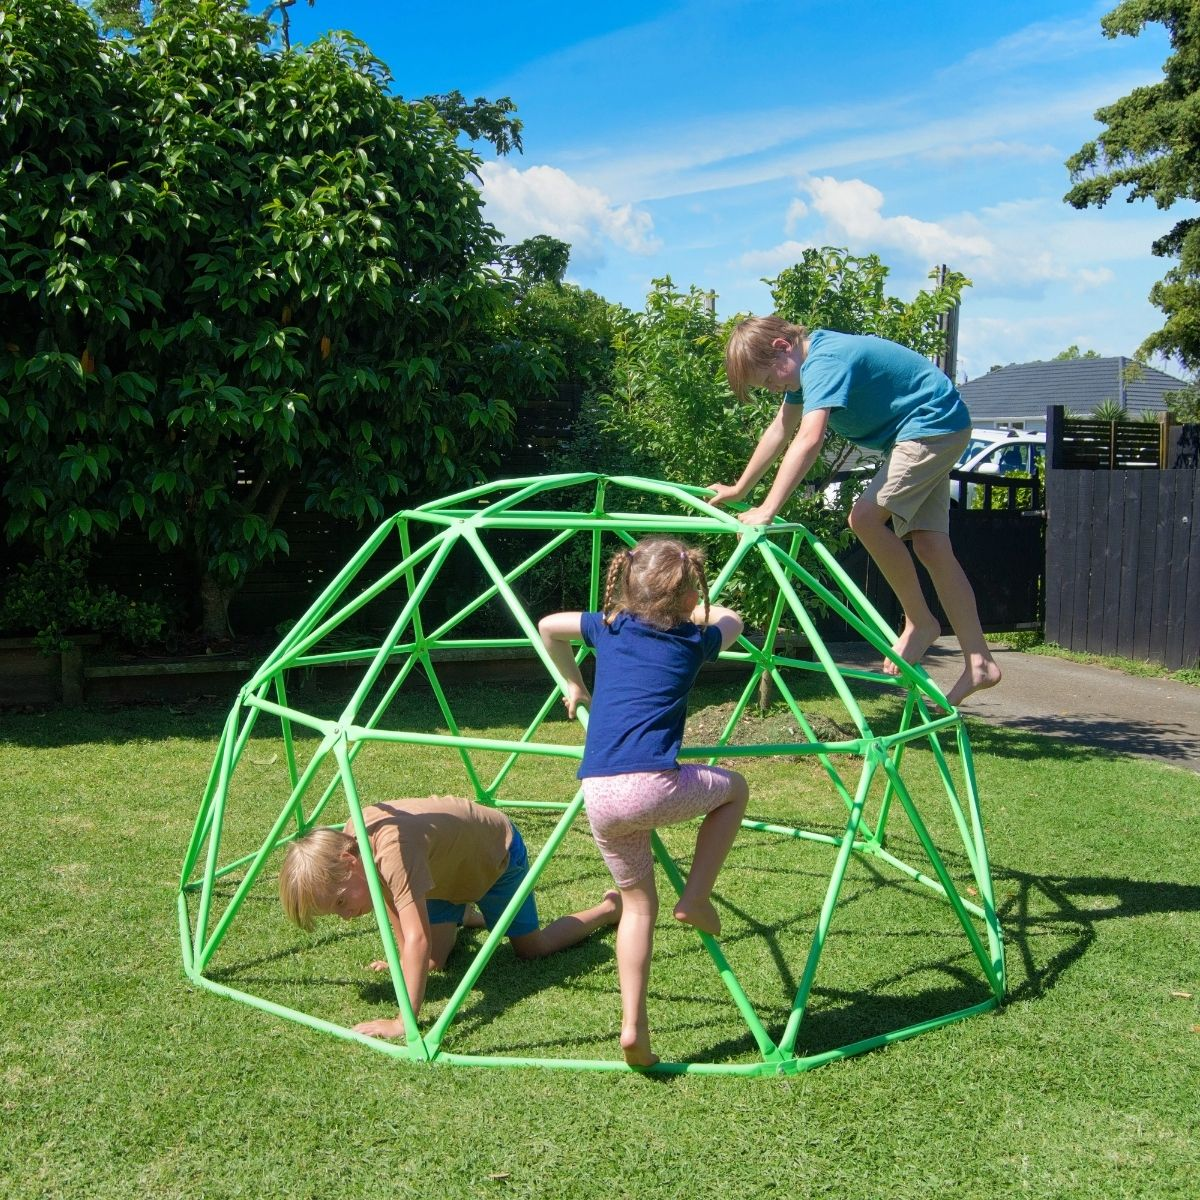 Three young kids climbing dome climber in garden.